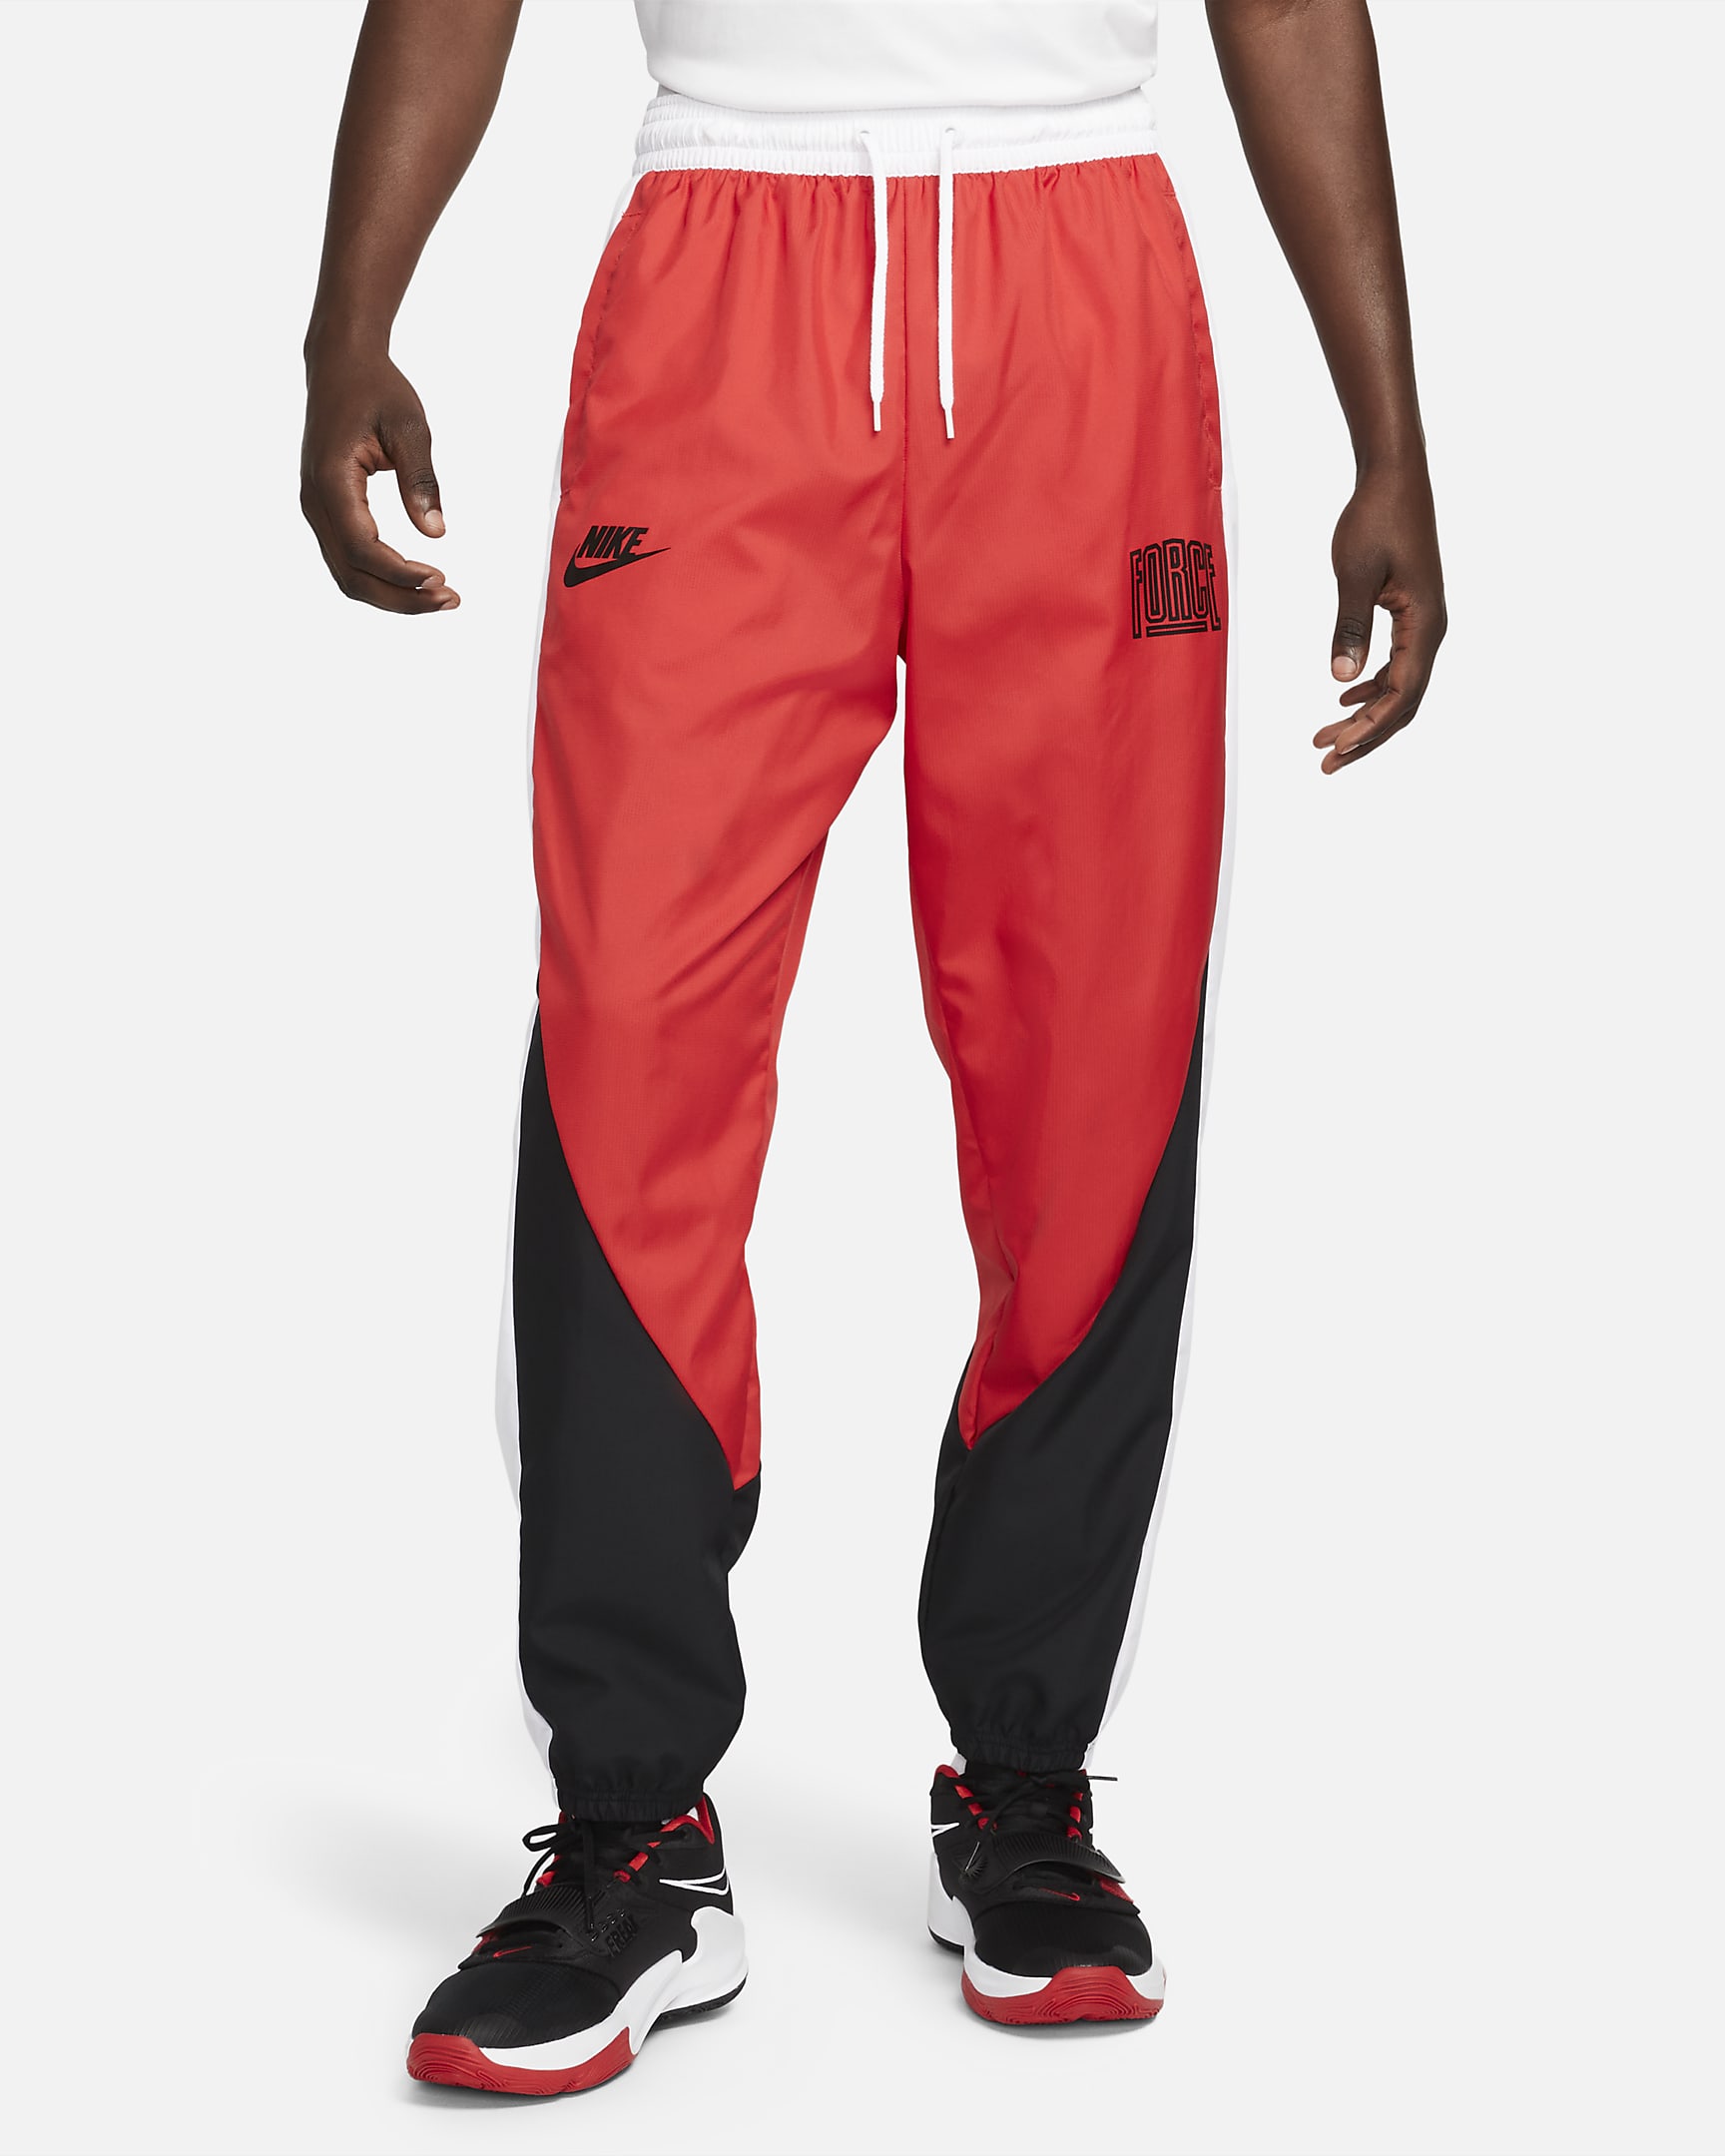 Nike Starting 5 Men's Basketball Trousers. Nike ZA